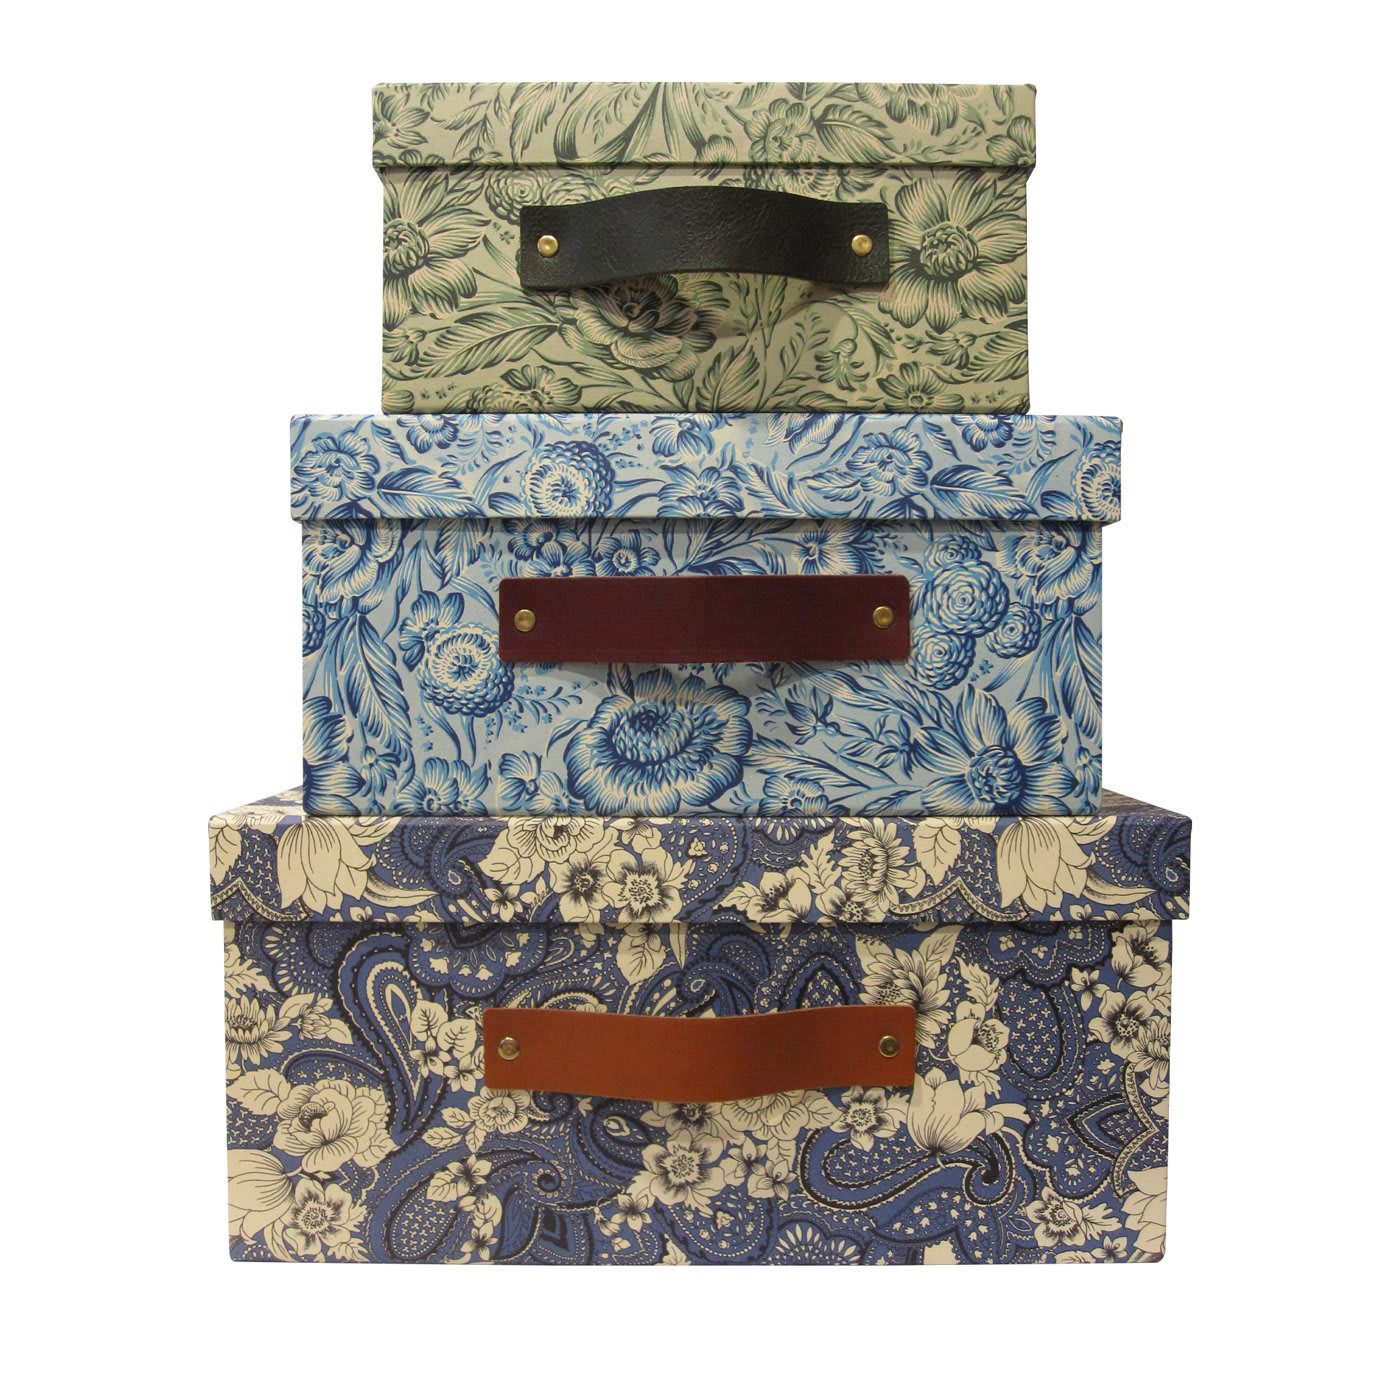 Set of 3 Nesting Florentine Paper Boxes #1 - AtelierGK Firenze